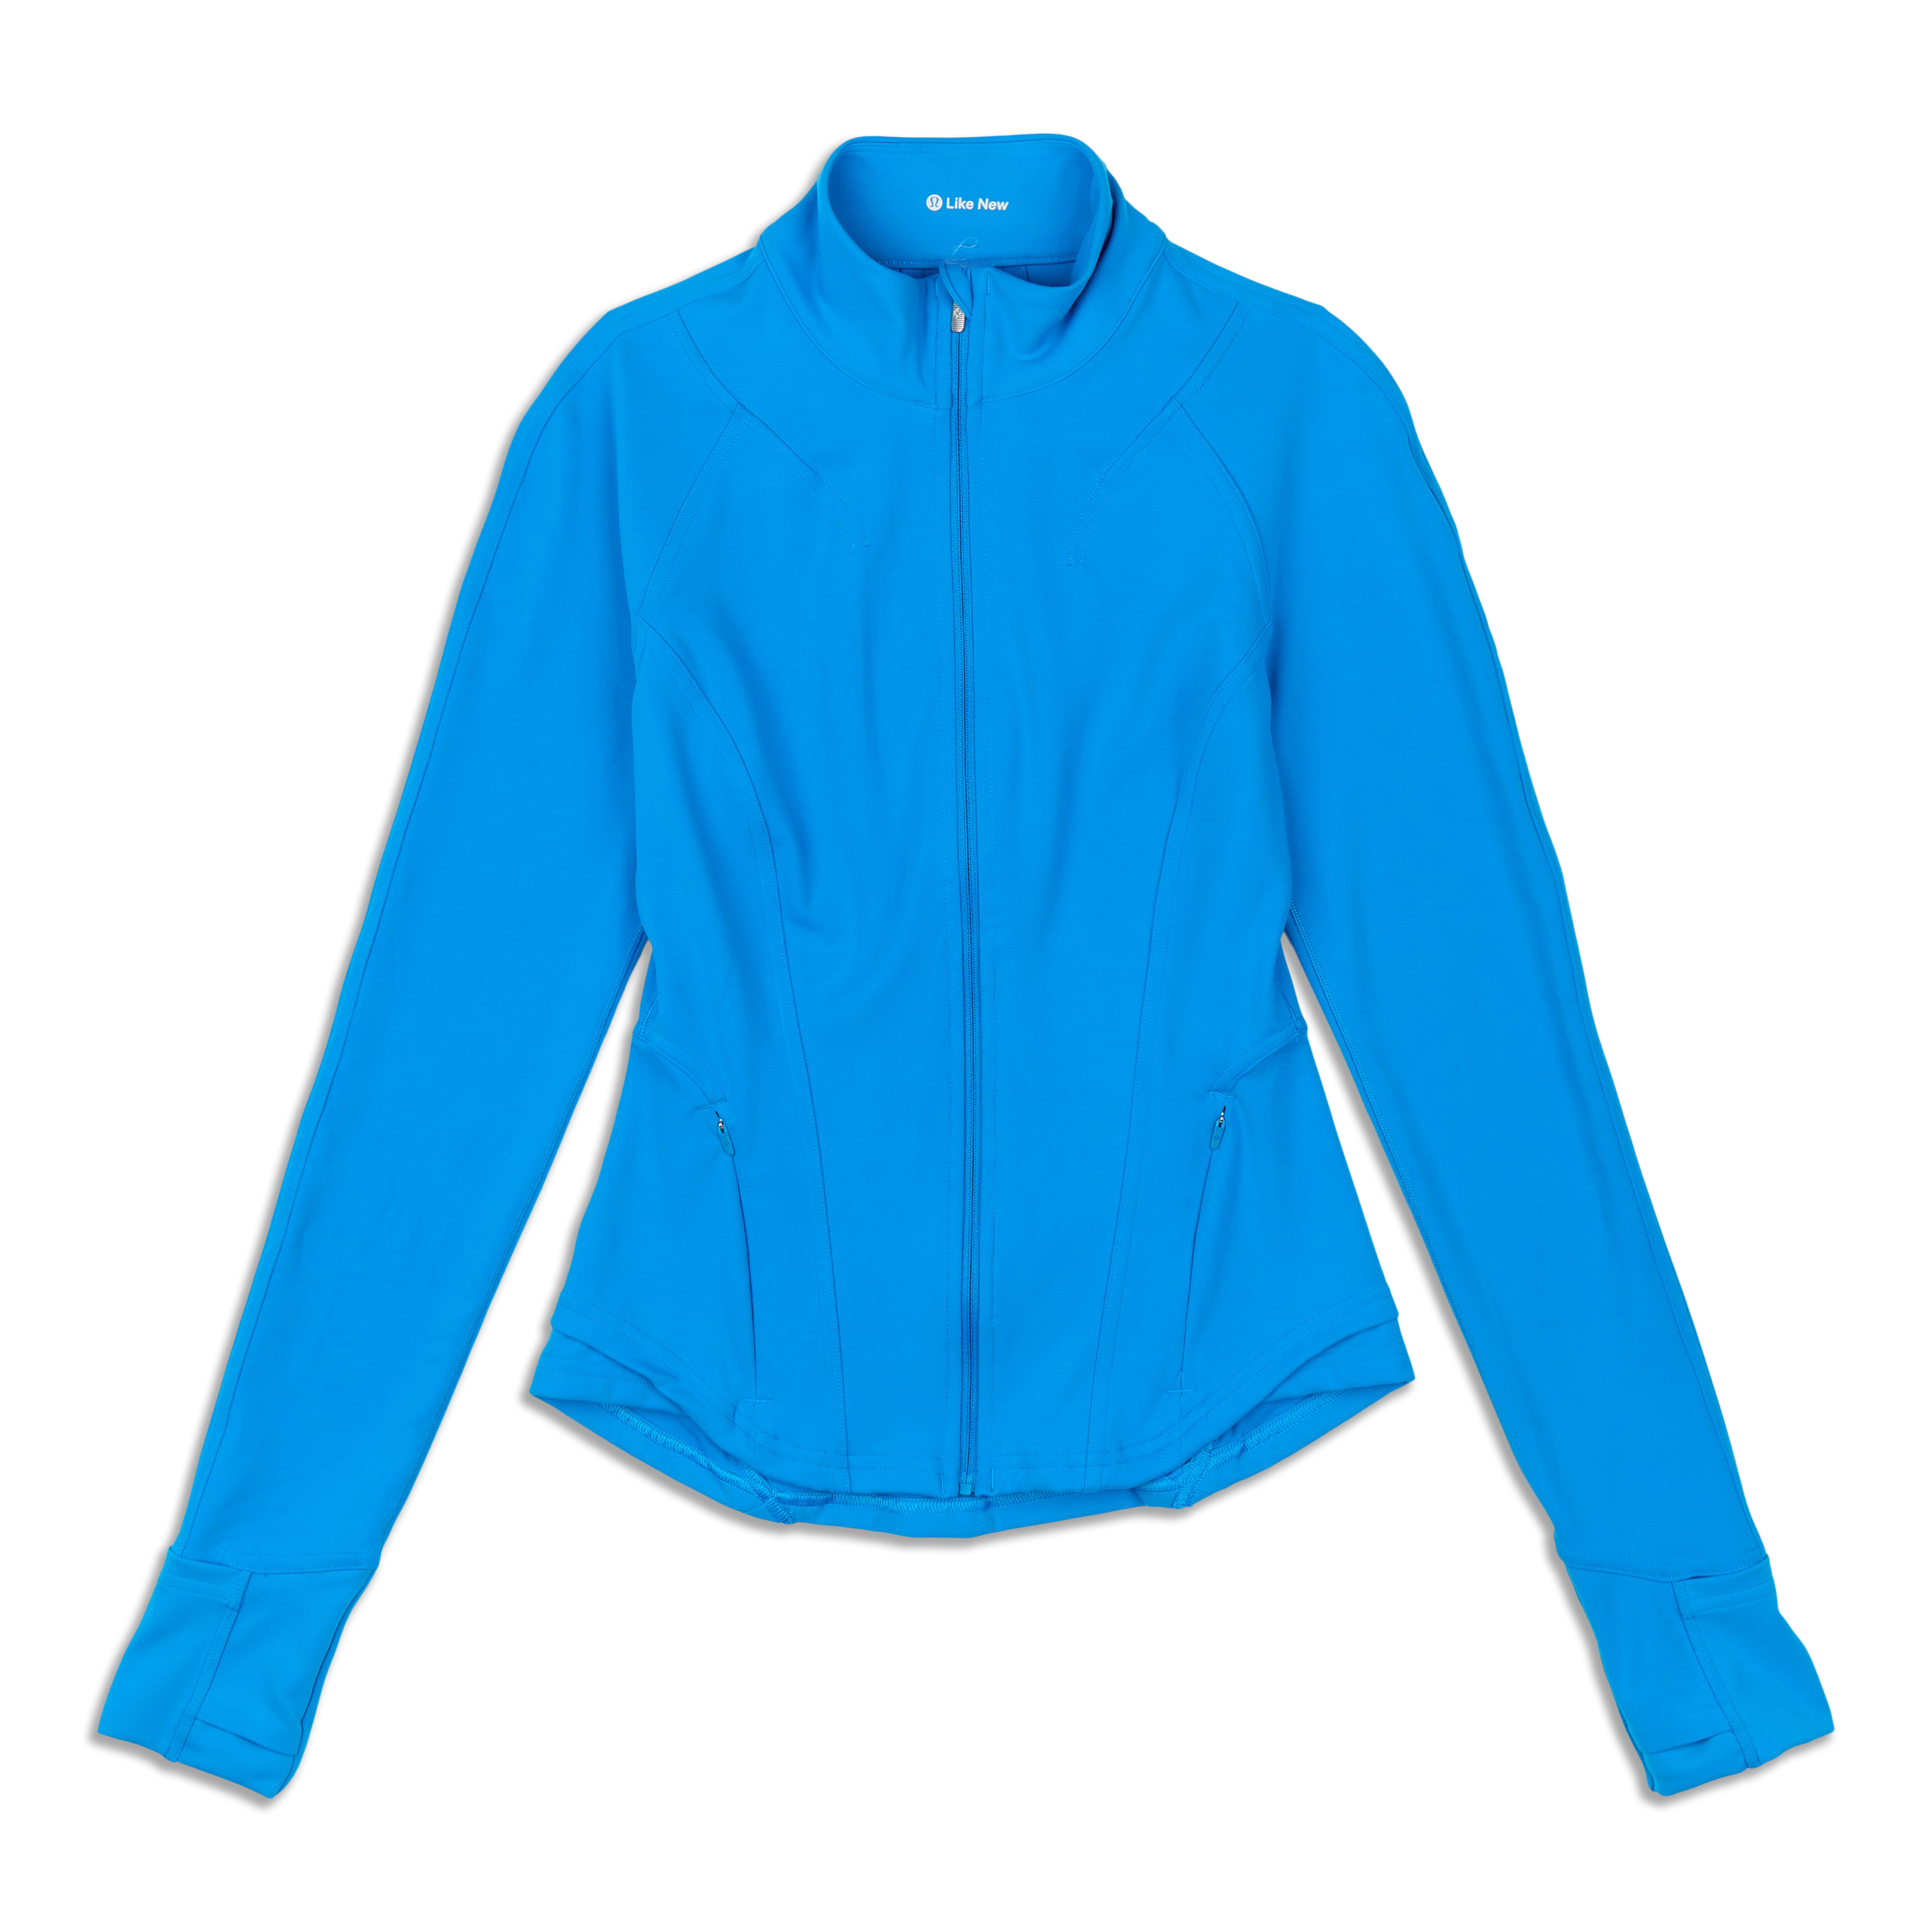 NWT LULULEMON Women's InStill Jacket SIZE 10 color Poolside blue